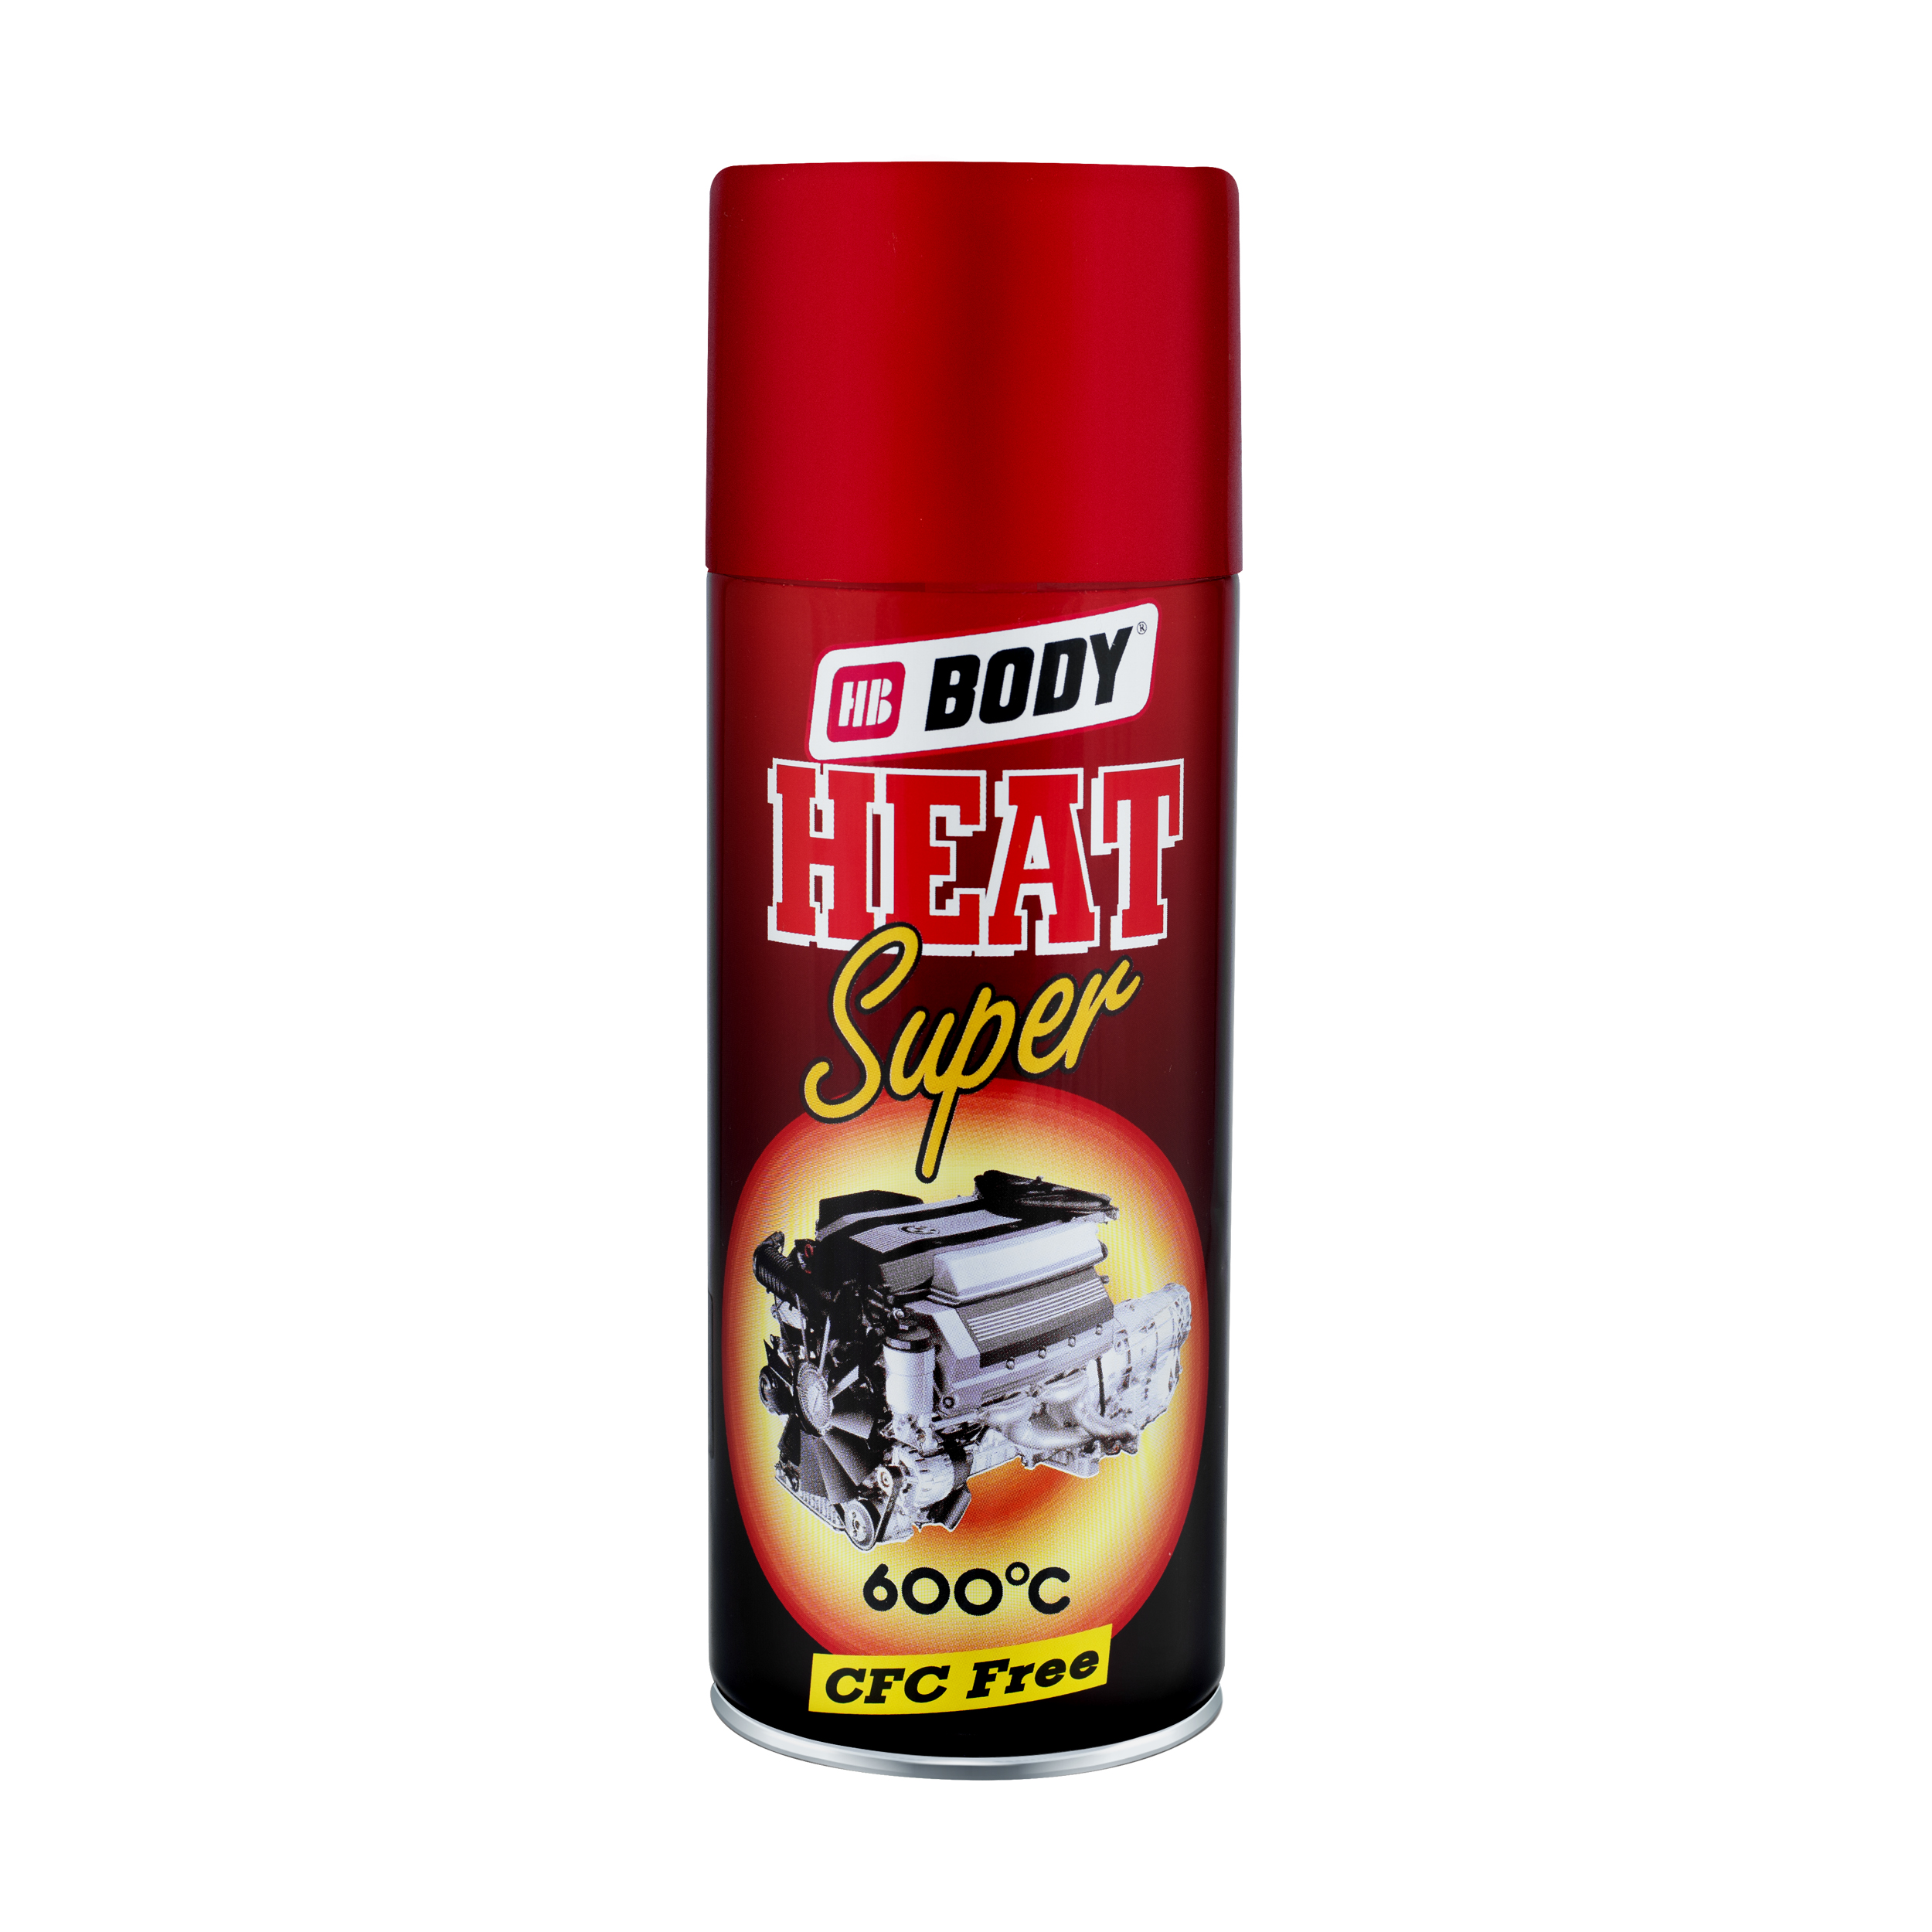 Body Spray Super texture Ferrari Red термостійка фарба червона 300°С 400мл